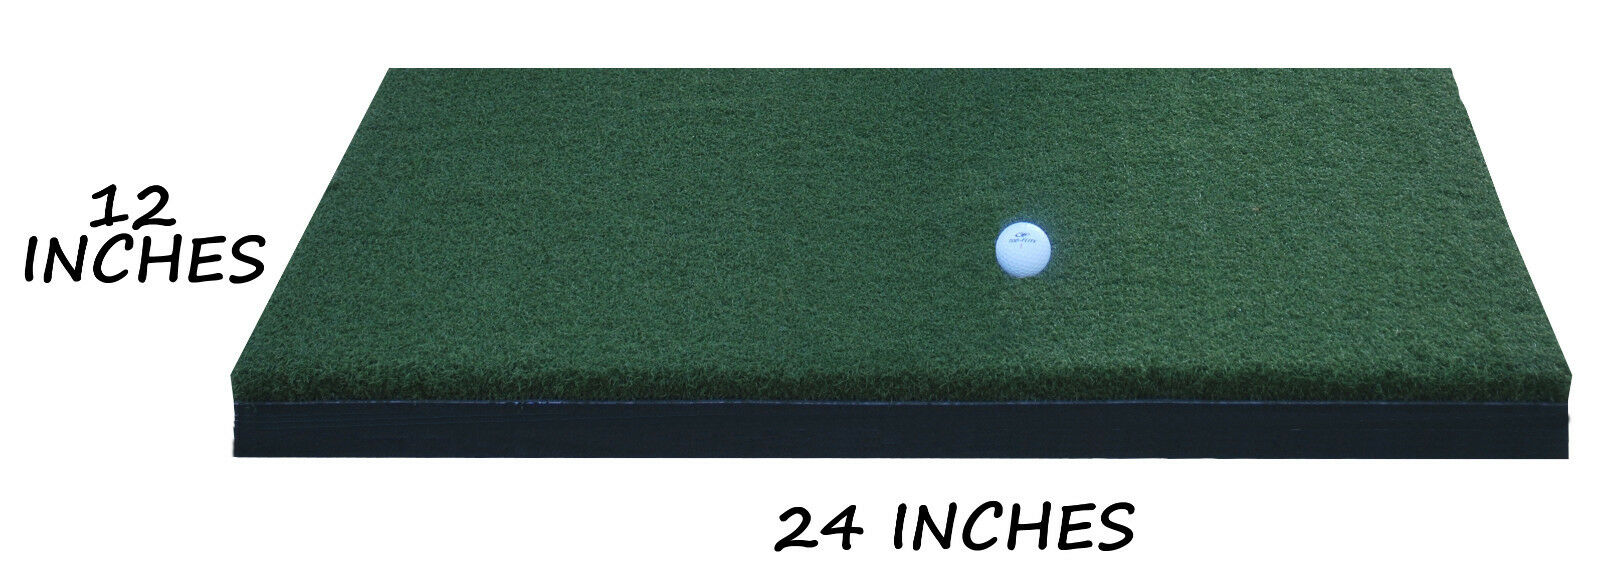 12" X 24" Nylon Golf Mats Turf Chipping Driving Range Practice Mat Training Aid